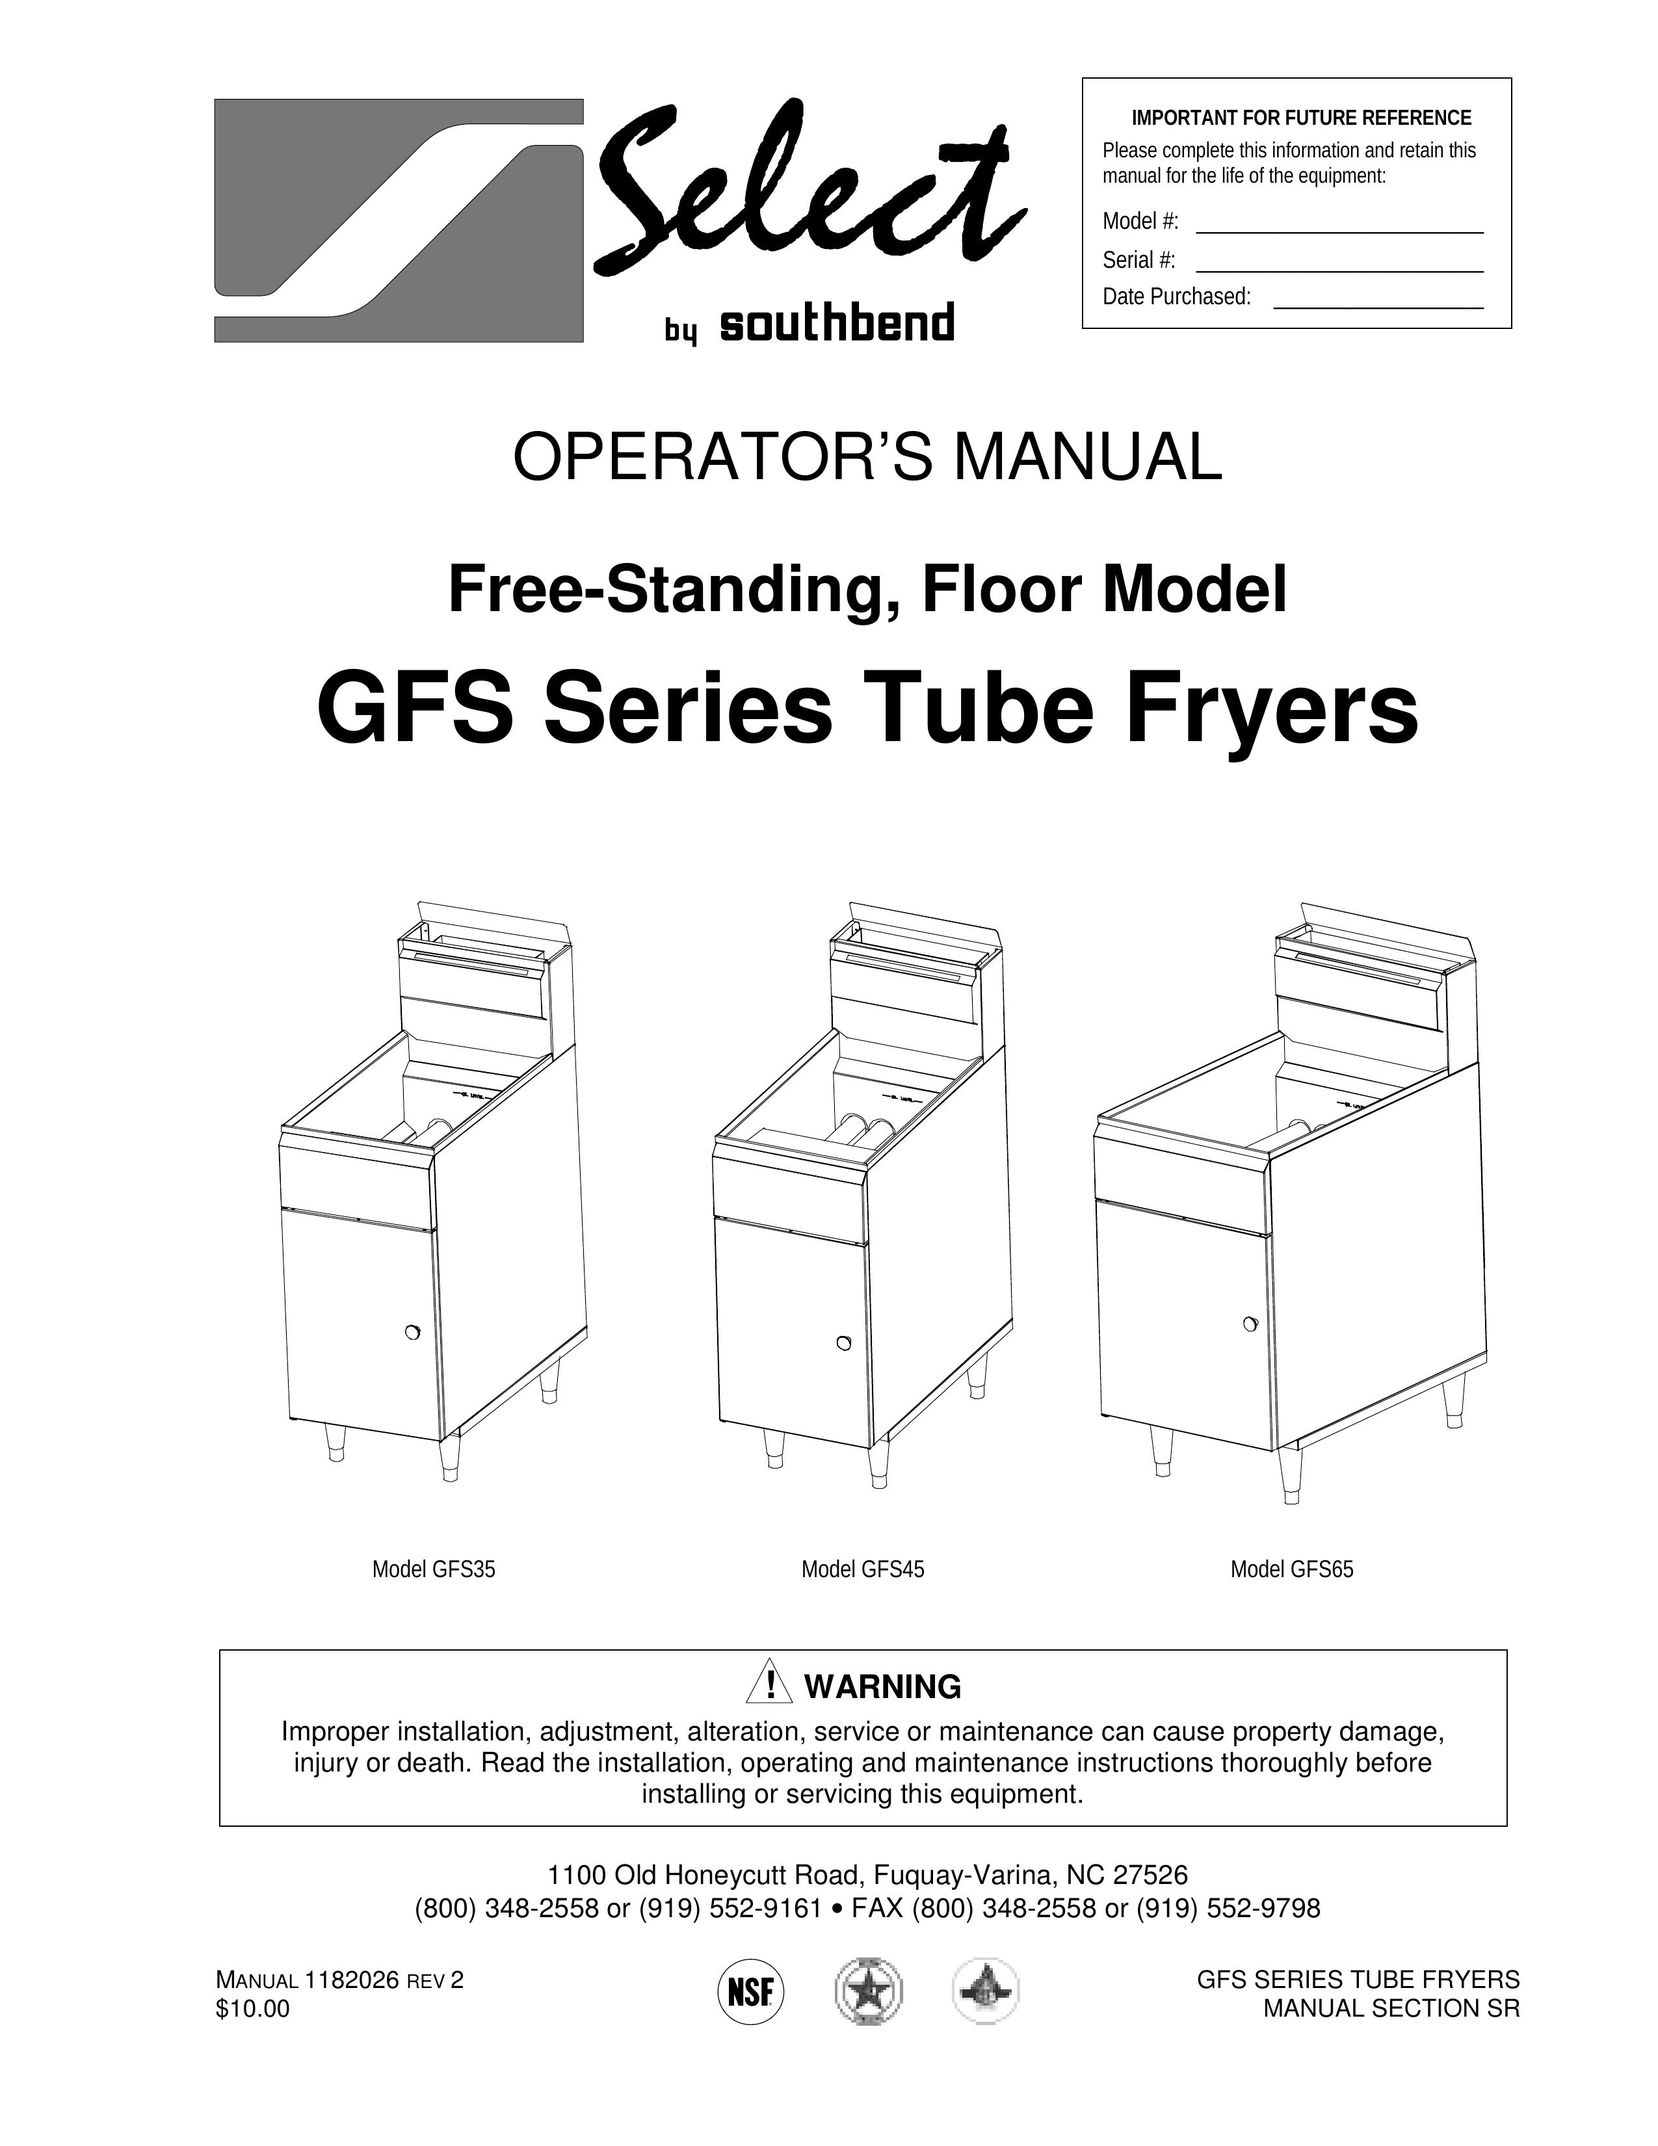 Southbend GFS65 Fryer User Manual